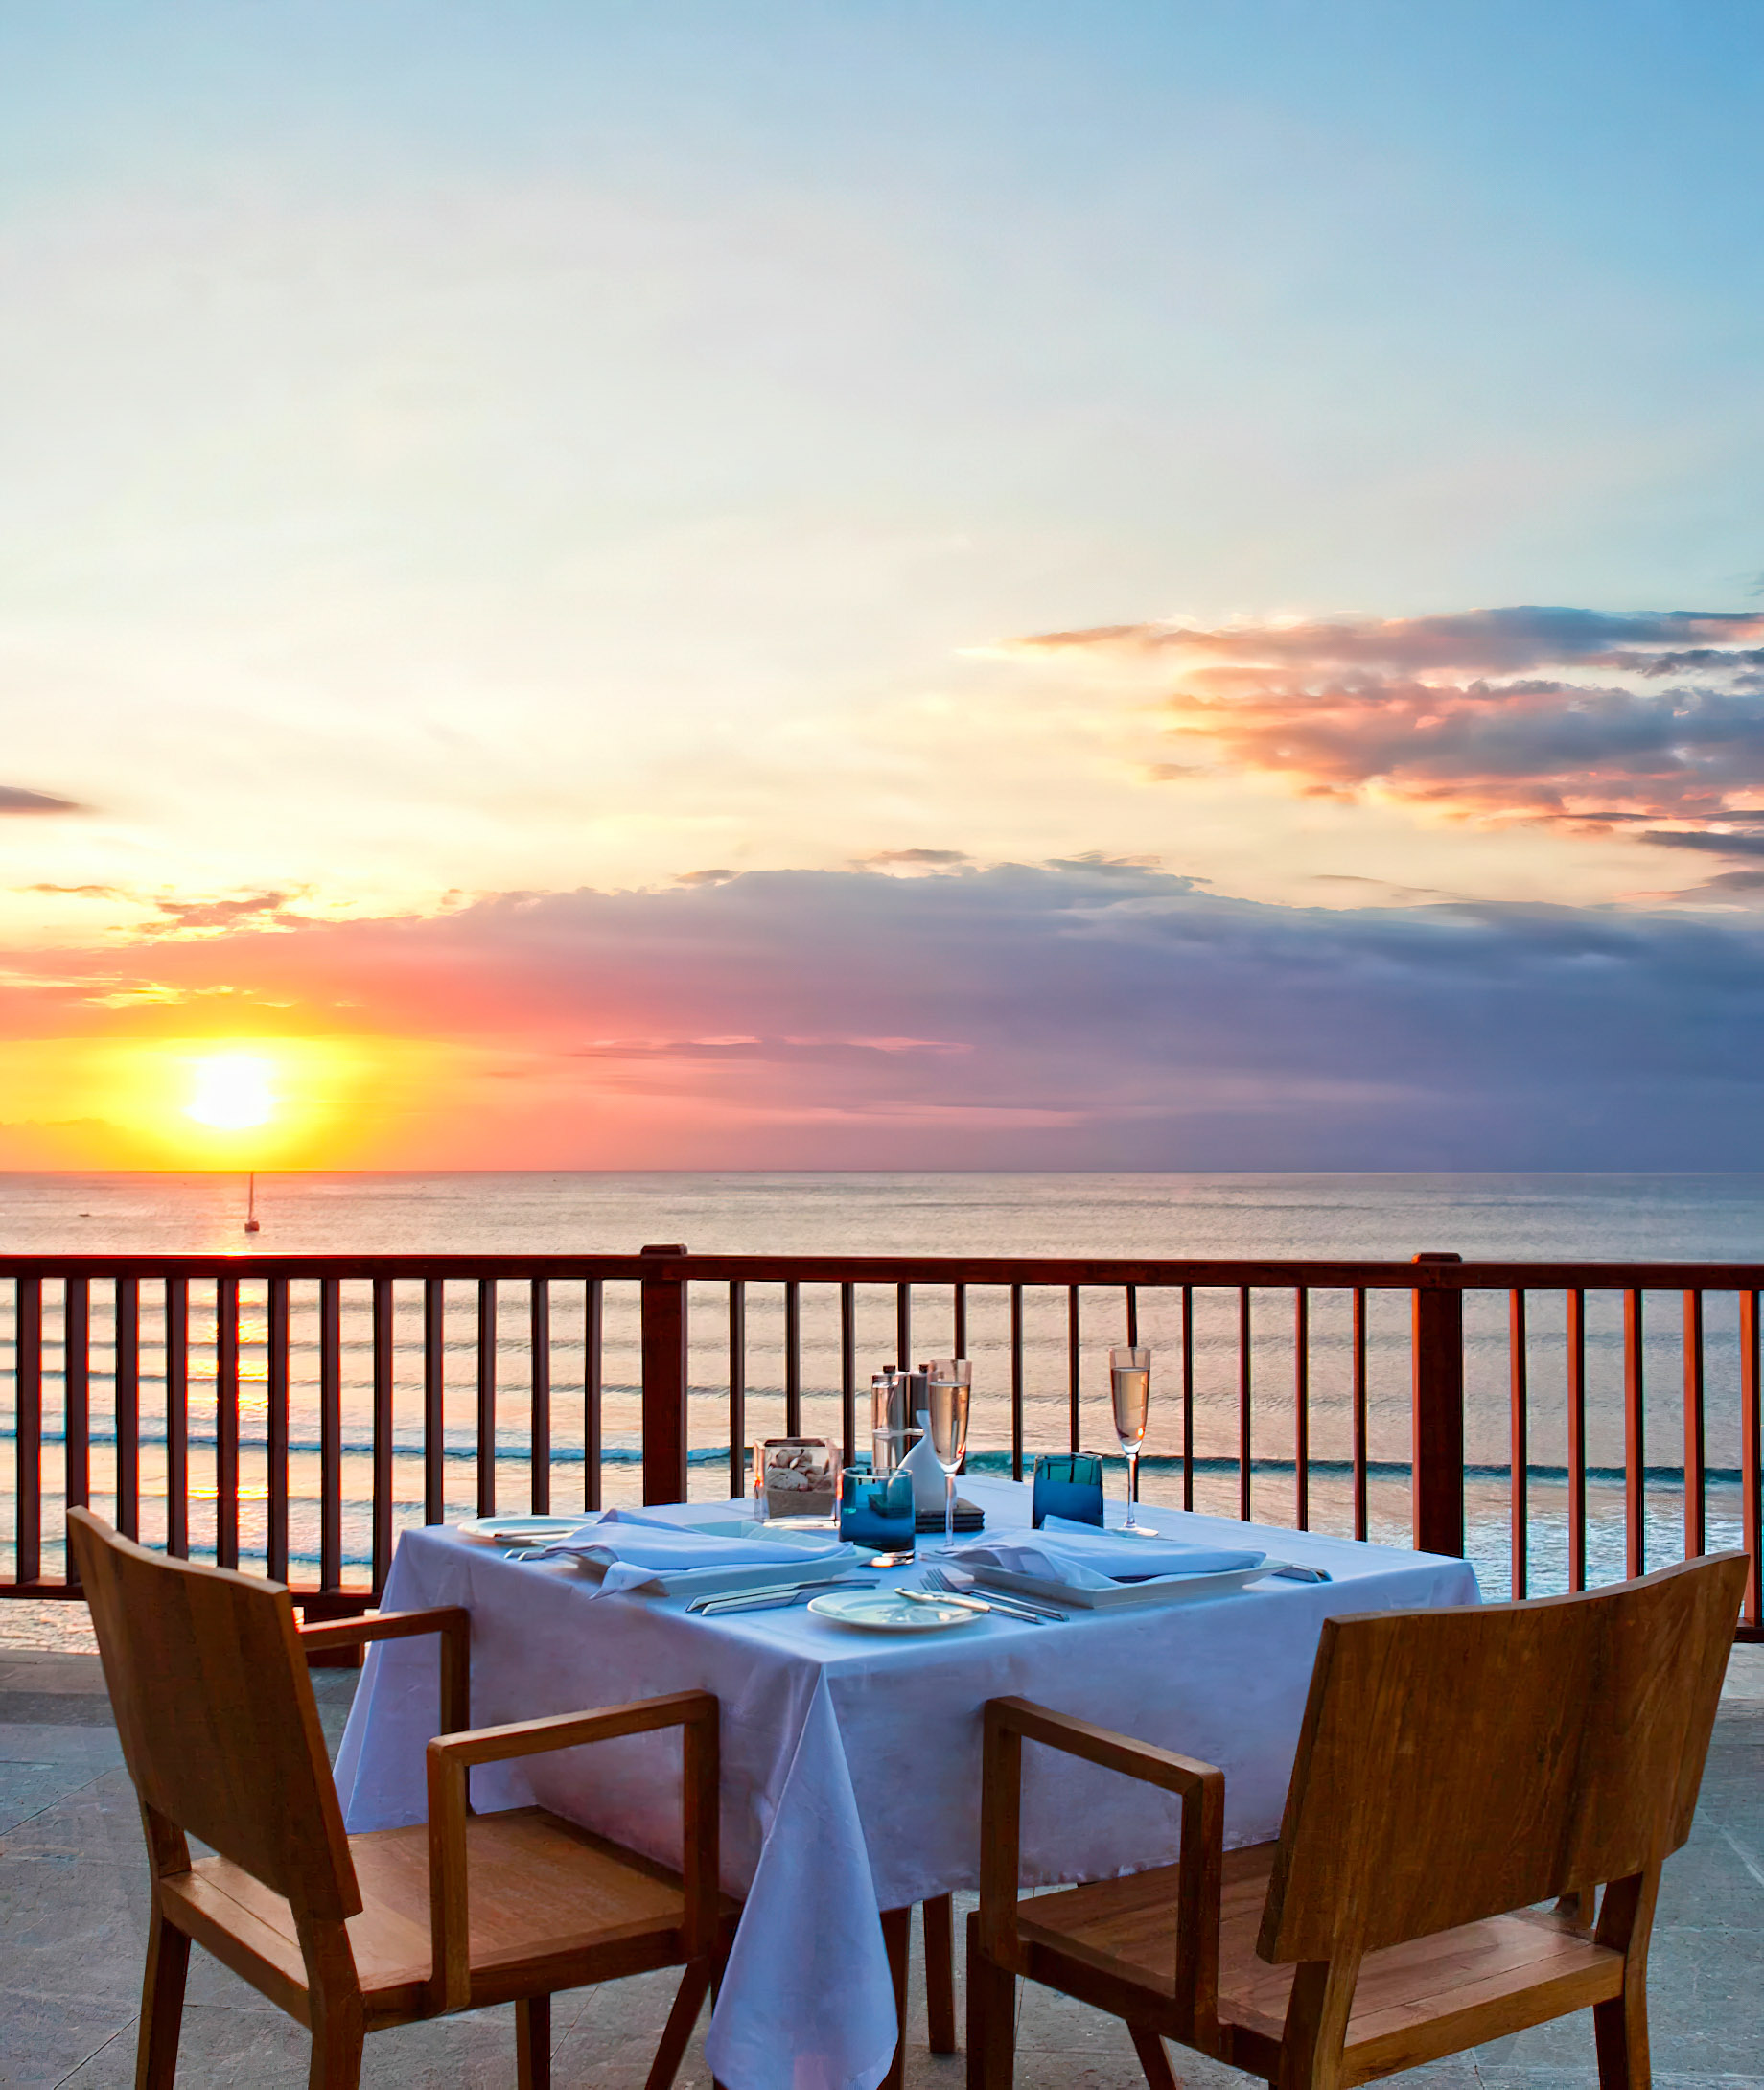 Anantara Uluwatu Bali Resort – Bali, Indonesia – Sunset Dining